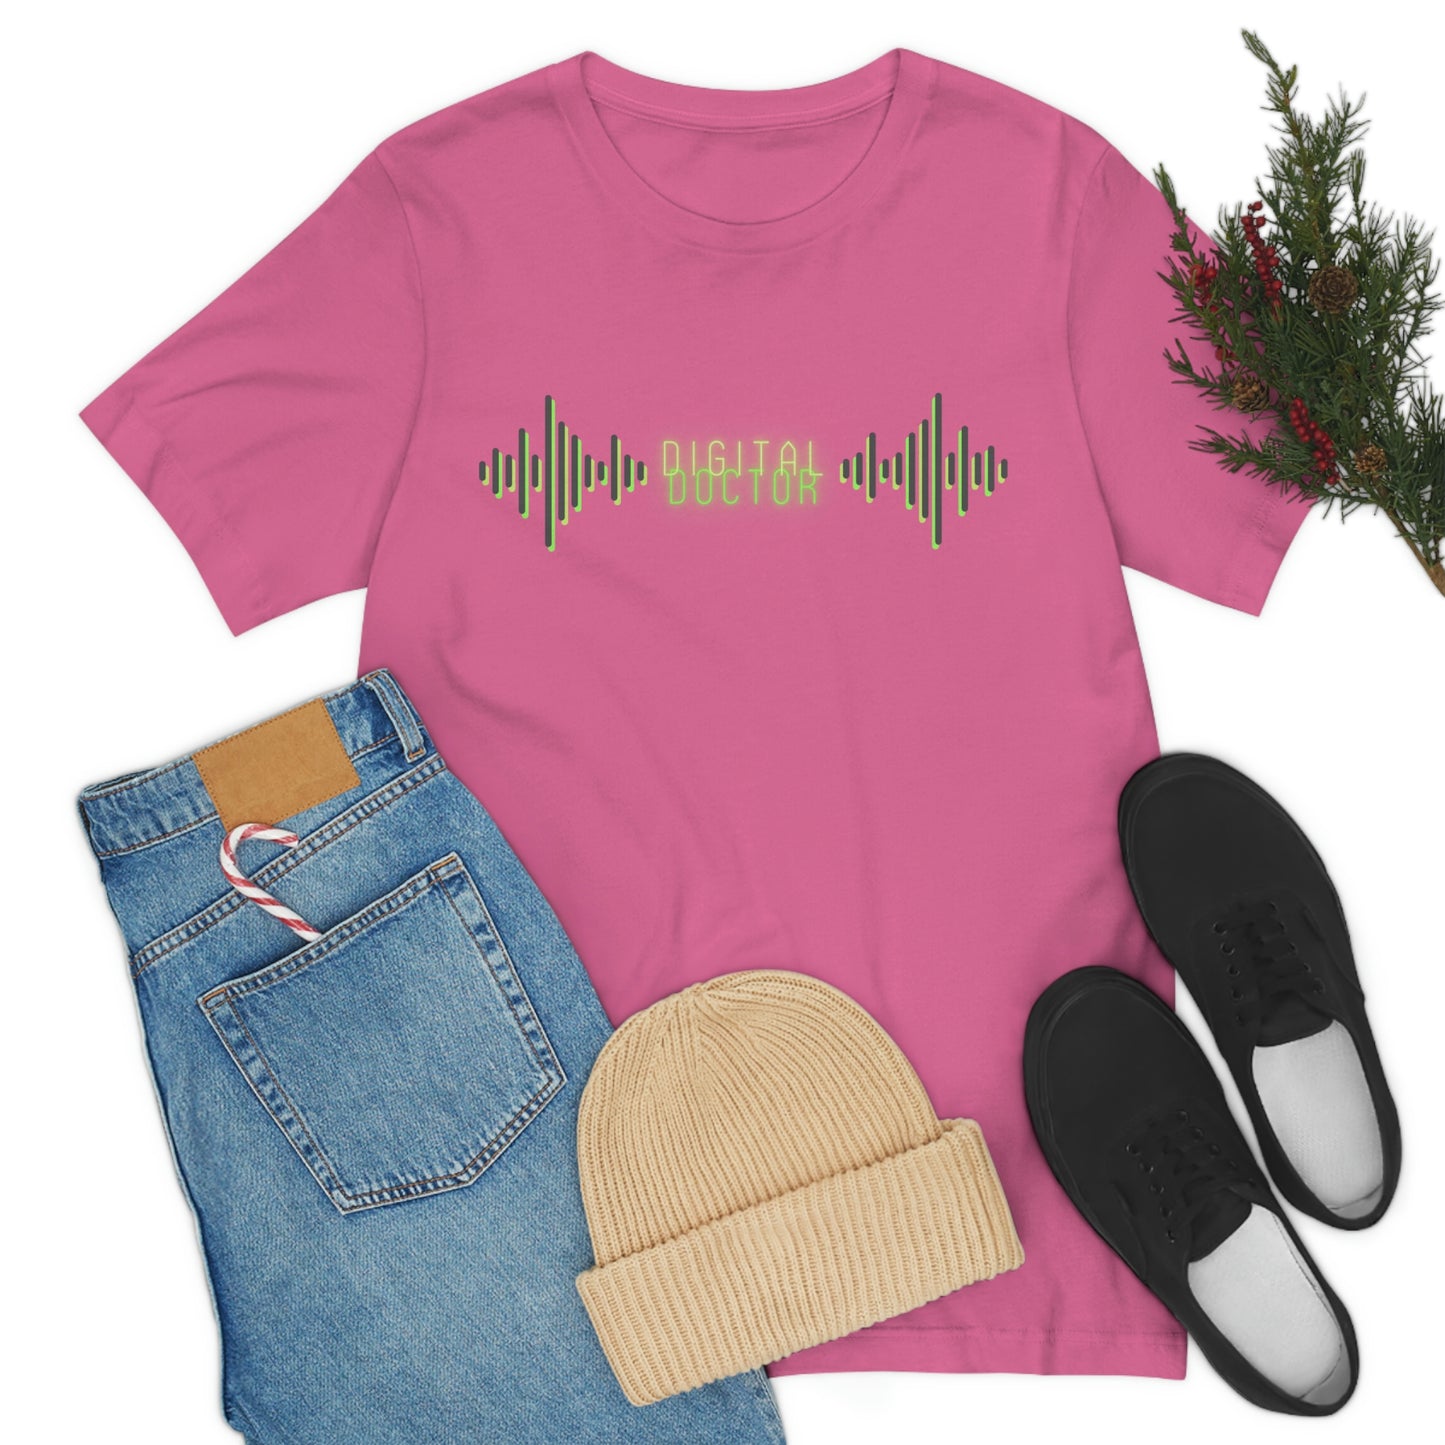 Digital Doctor of Sound T-Shirt │Made in USA │Unisex - Men and Women's Cotton Tee │DJ Sound Resonance